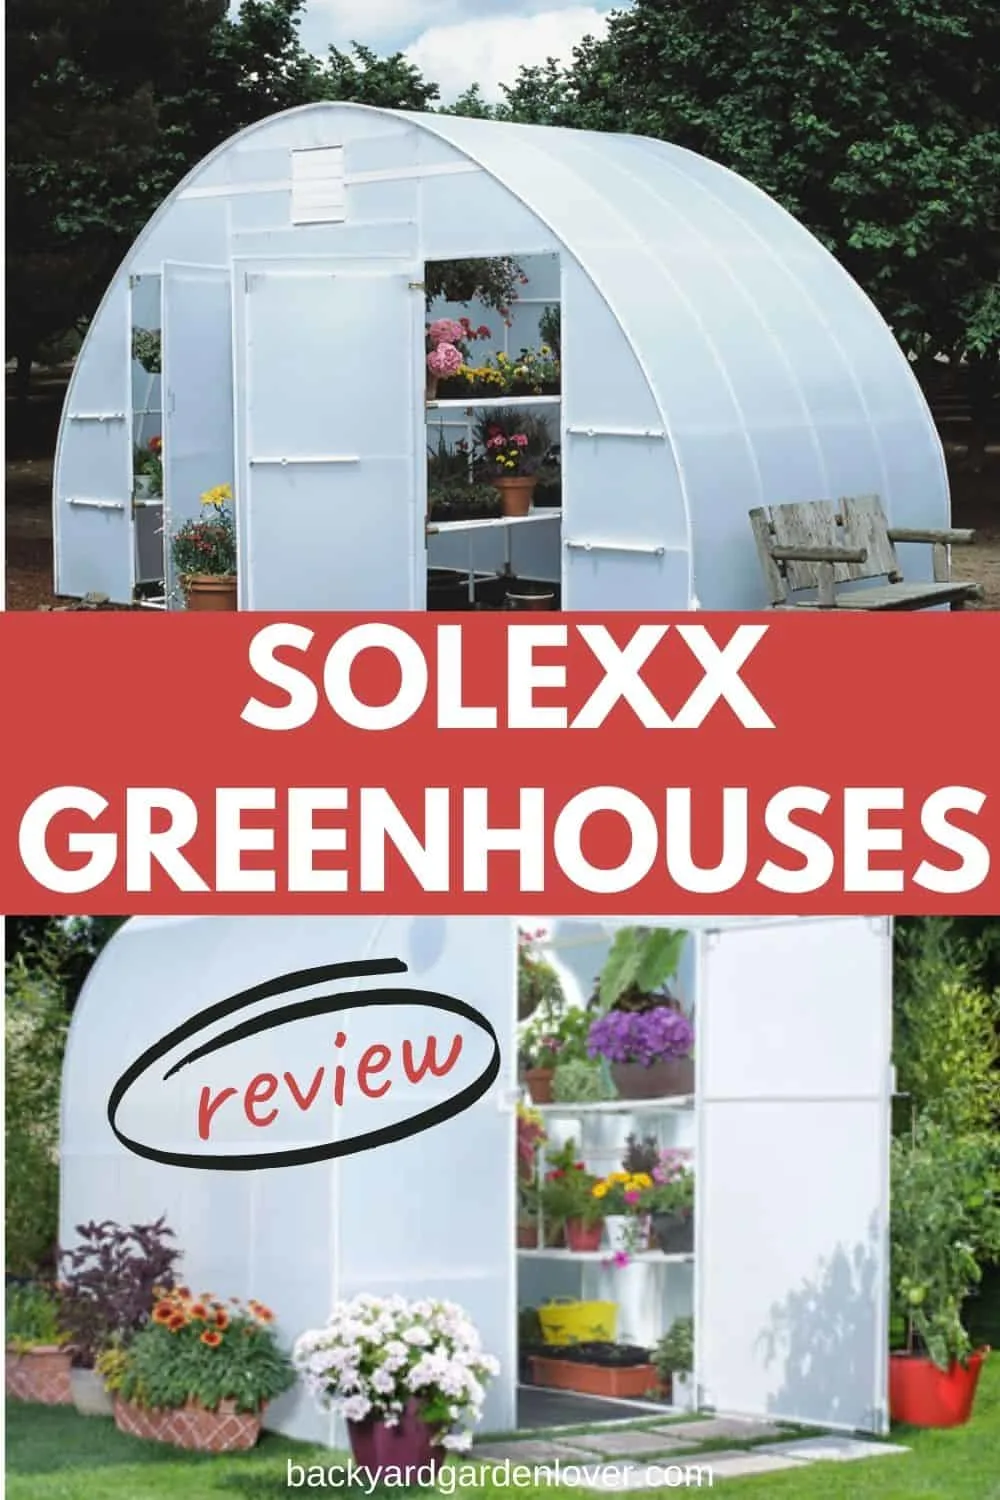 Solexx greenhouse review - Pinterest image